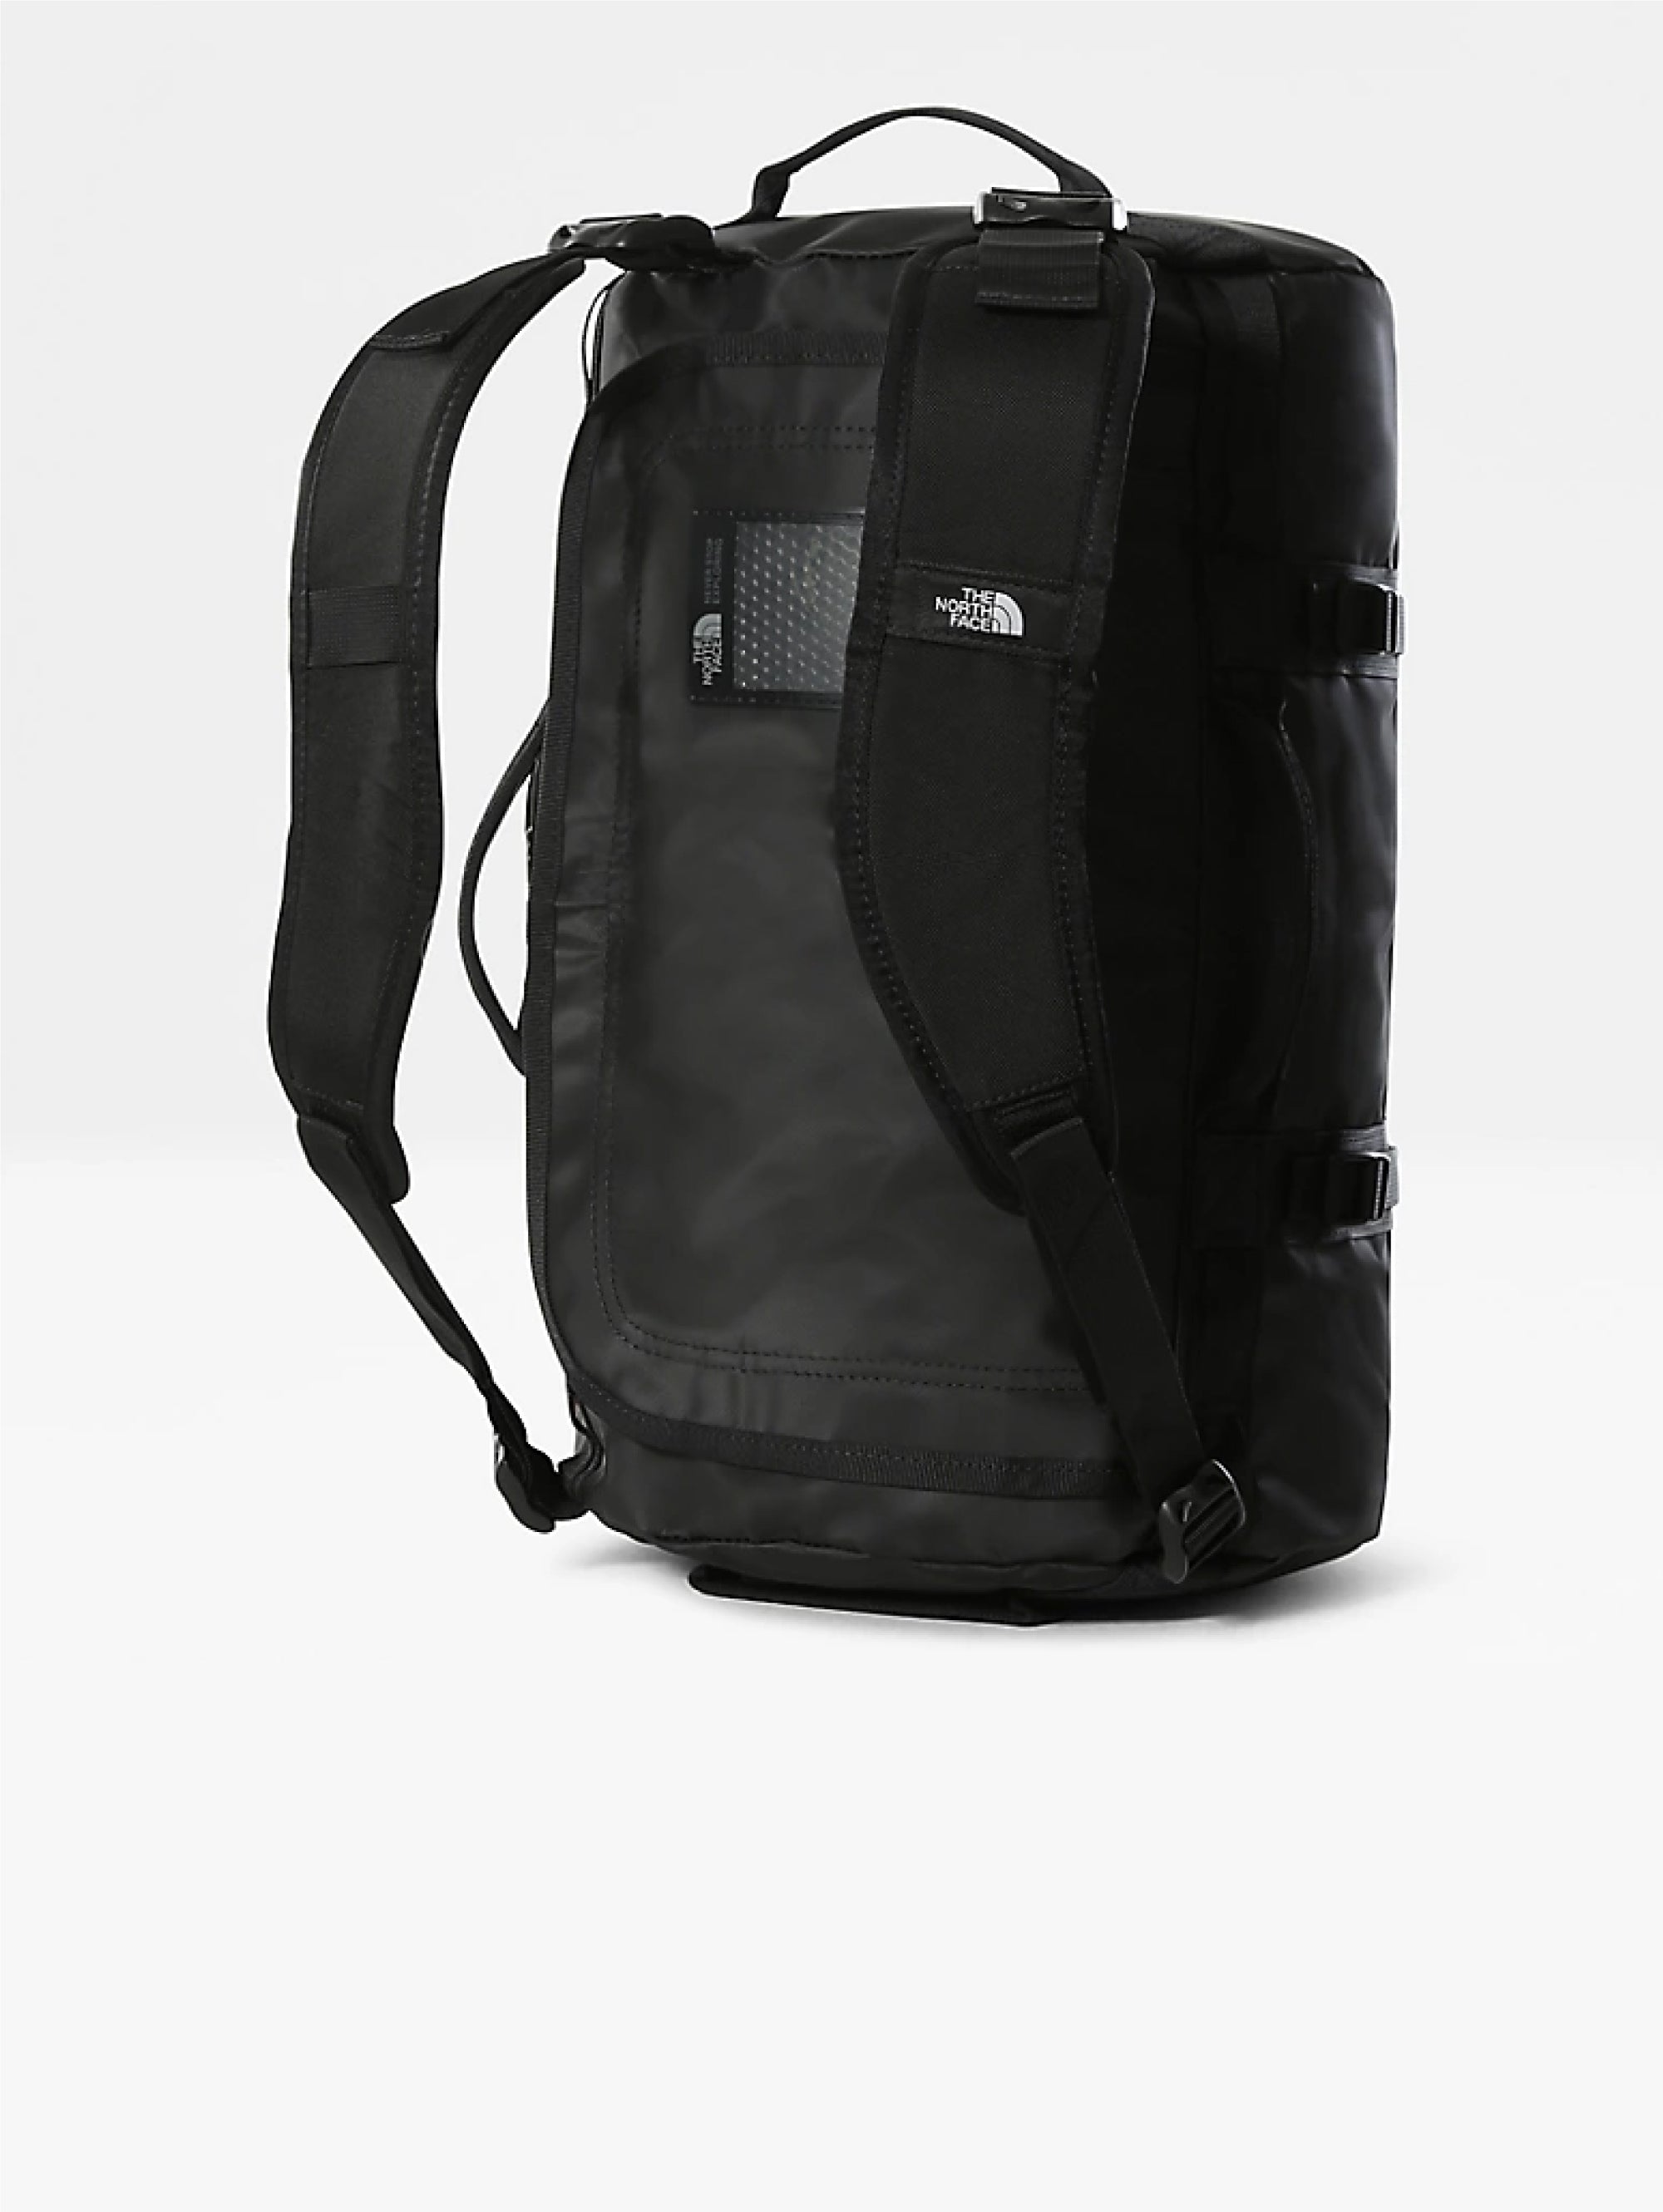 XS Black Laminated Nylon Duffle Bag